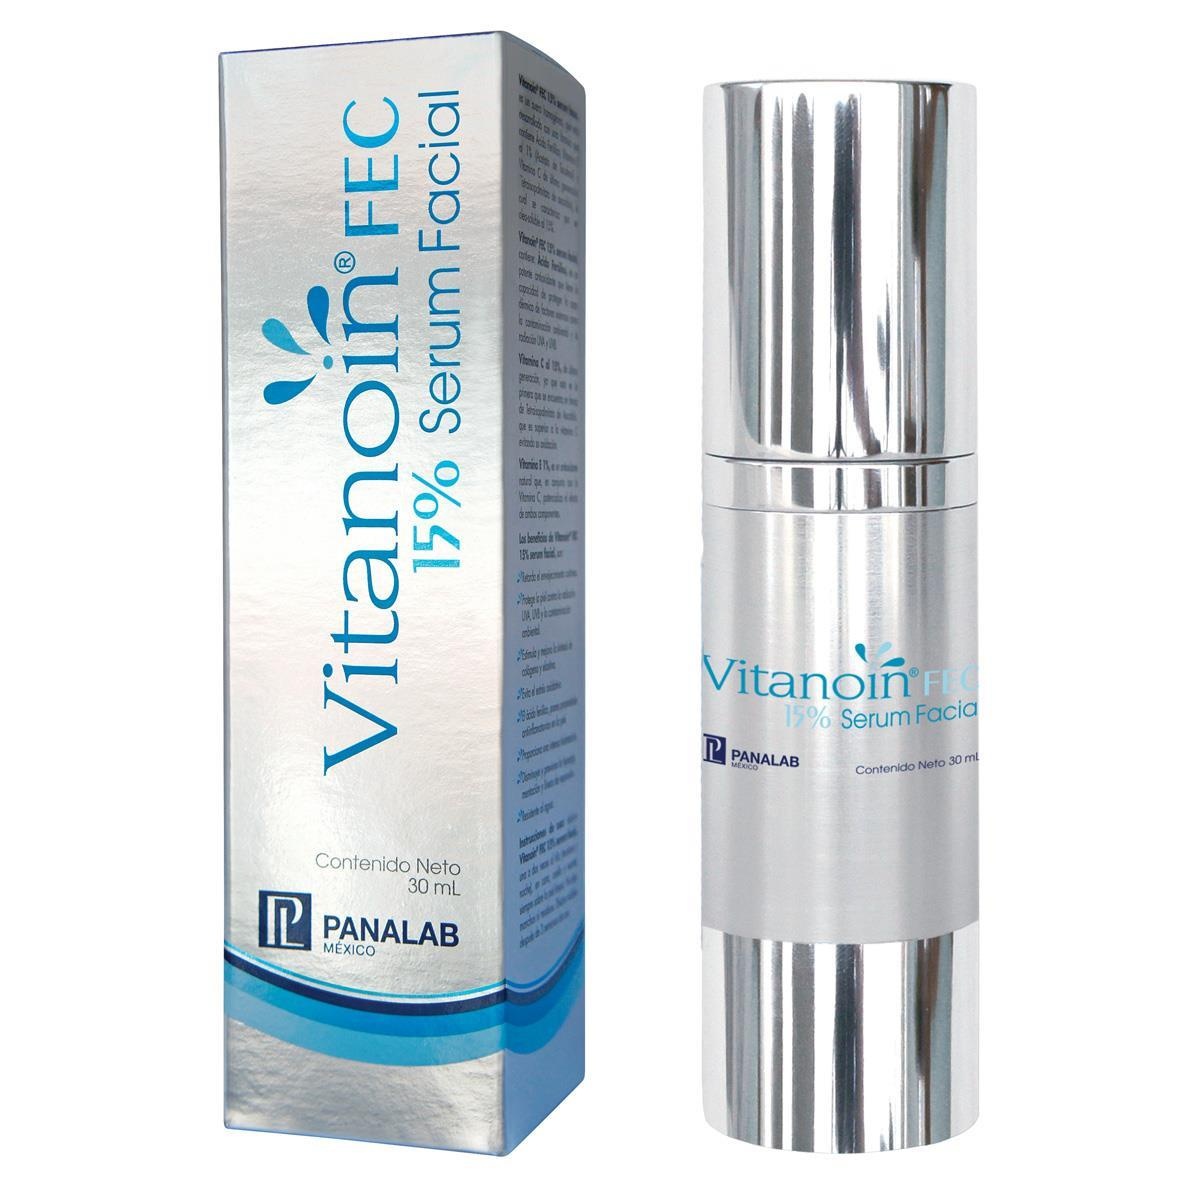 Vitanoin FEC 15% Suero Facial 30 ml (Panalab)